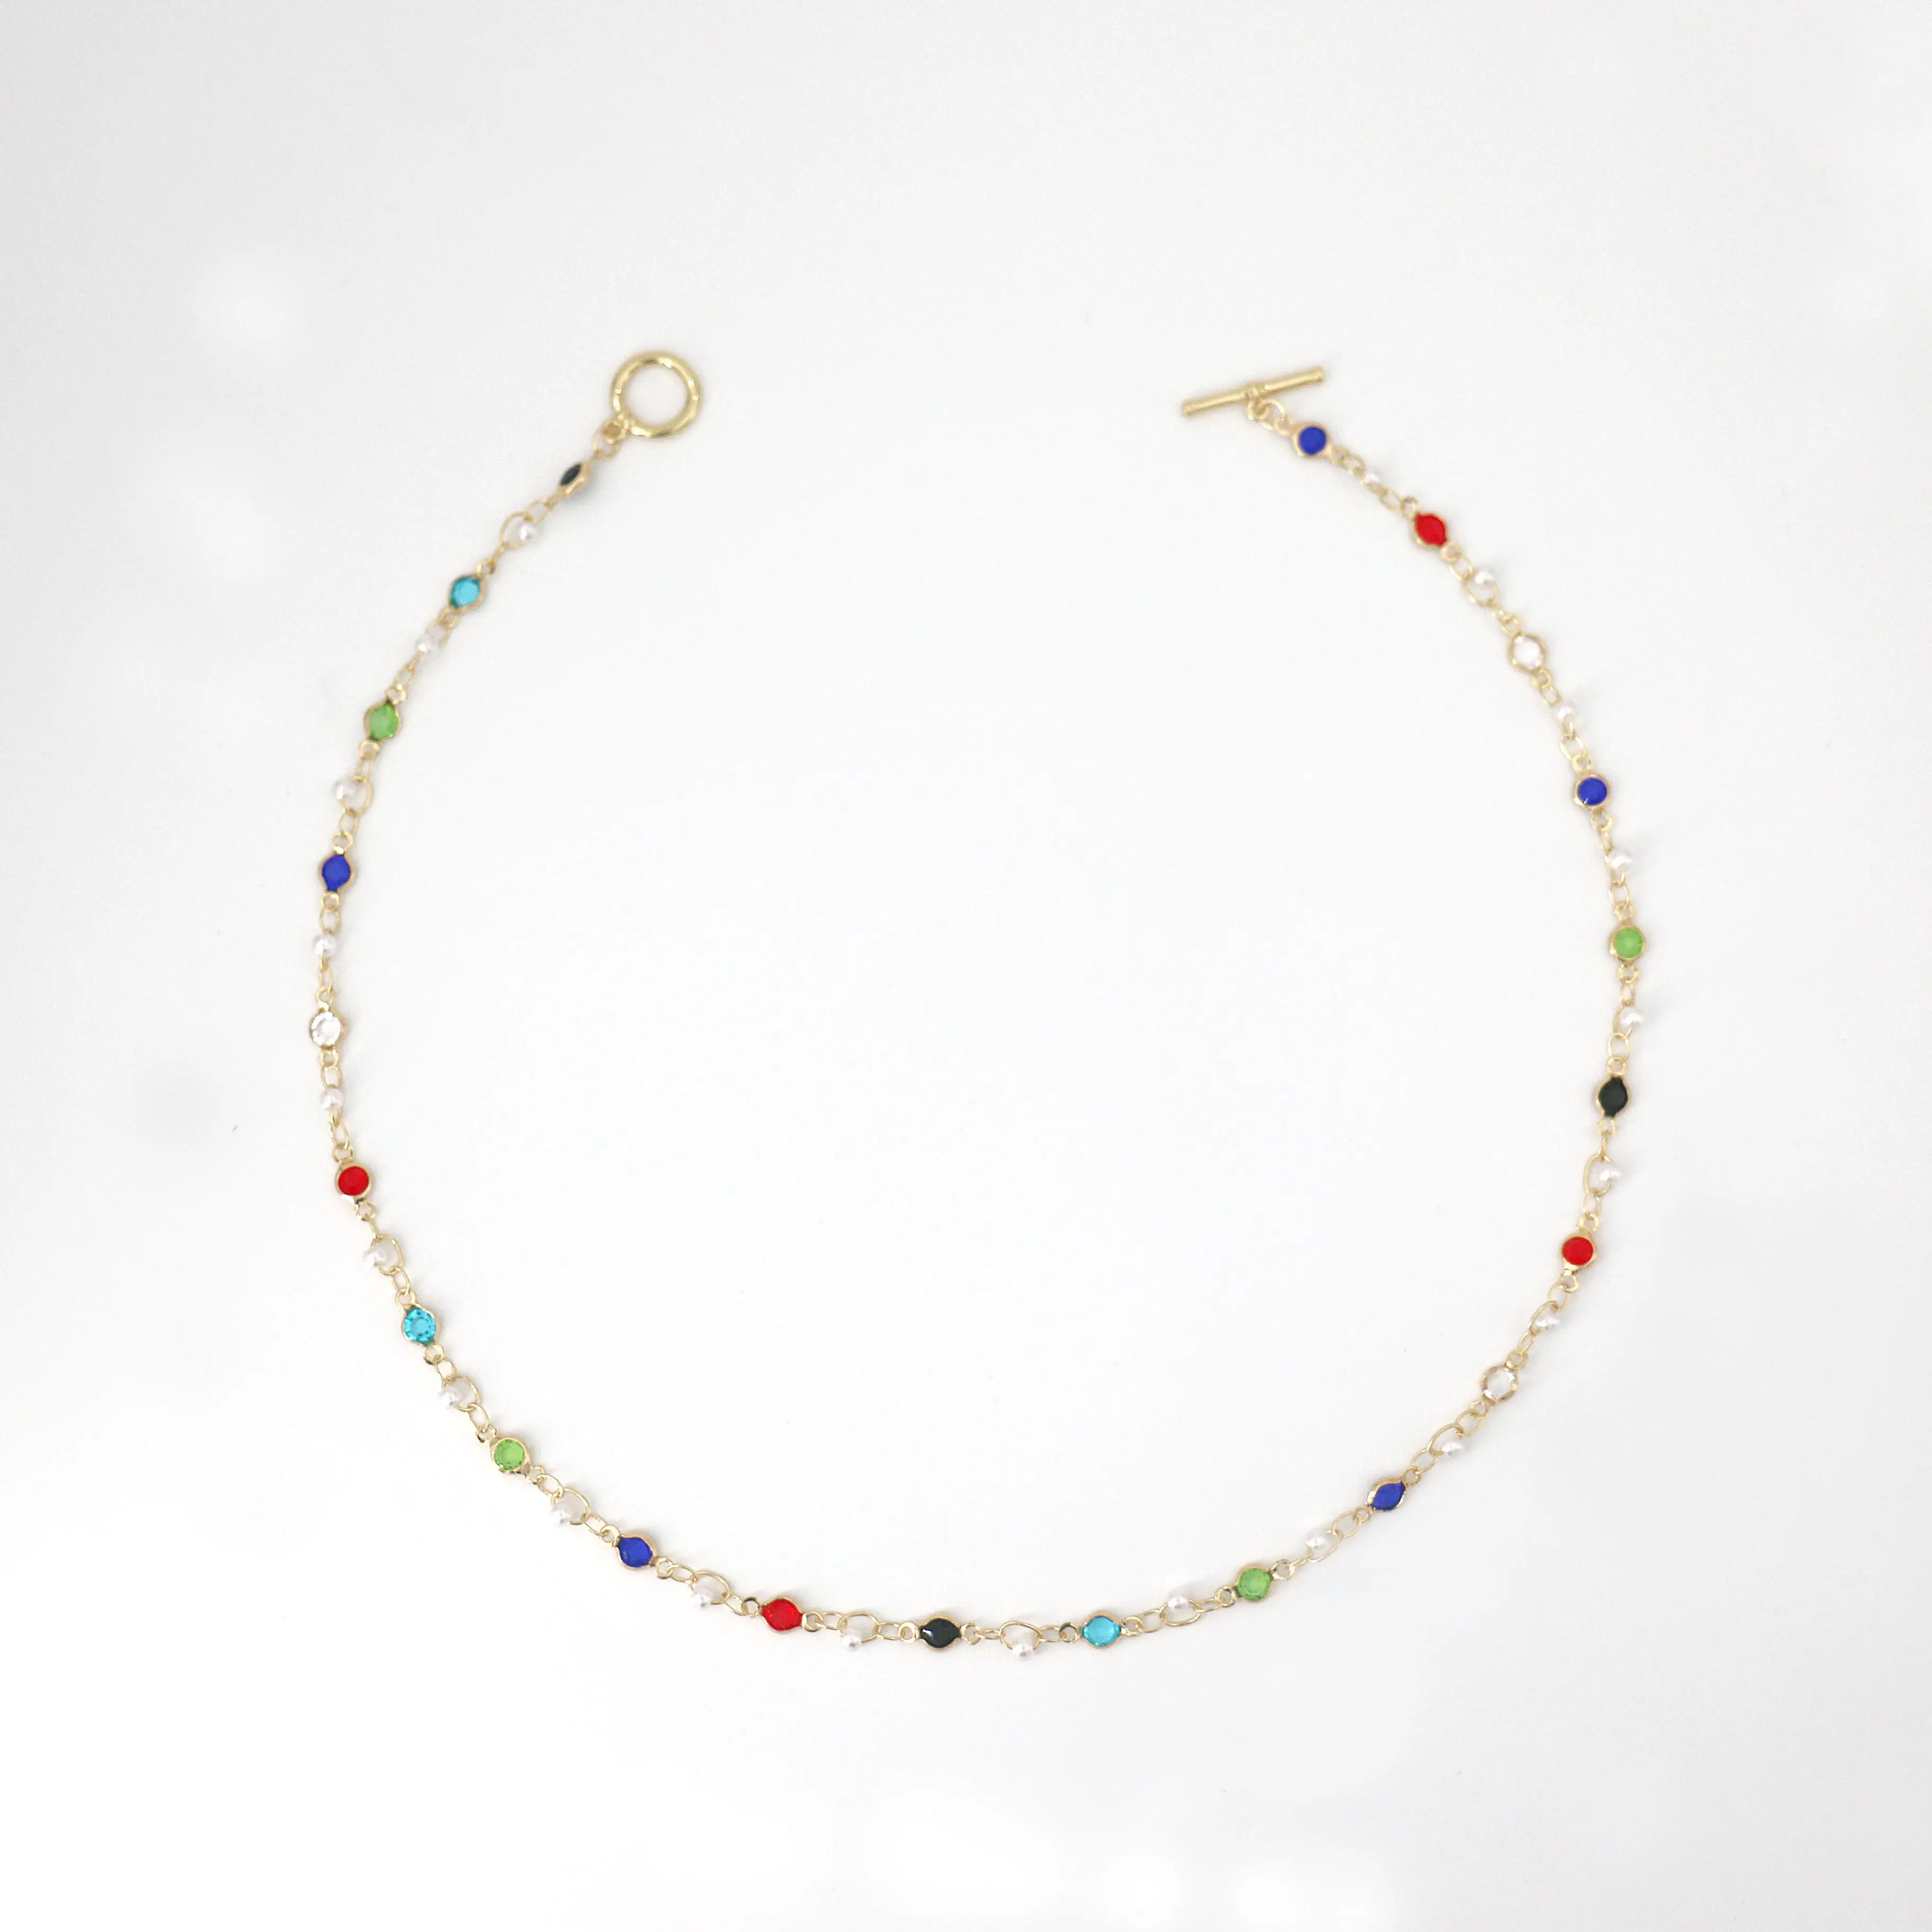 NEW Women's Charming Eye Necklace Bohemian Style Bead Chain